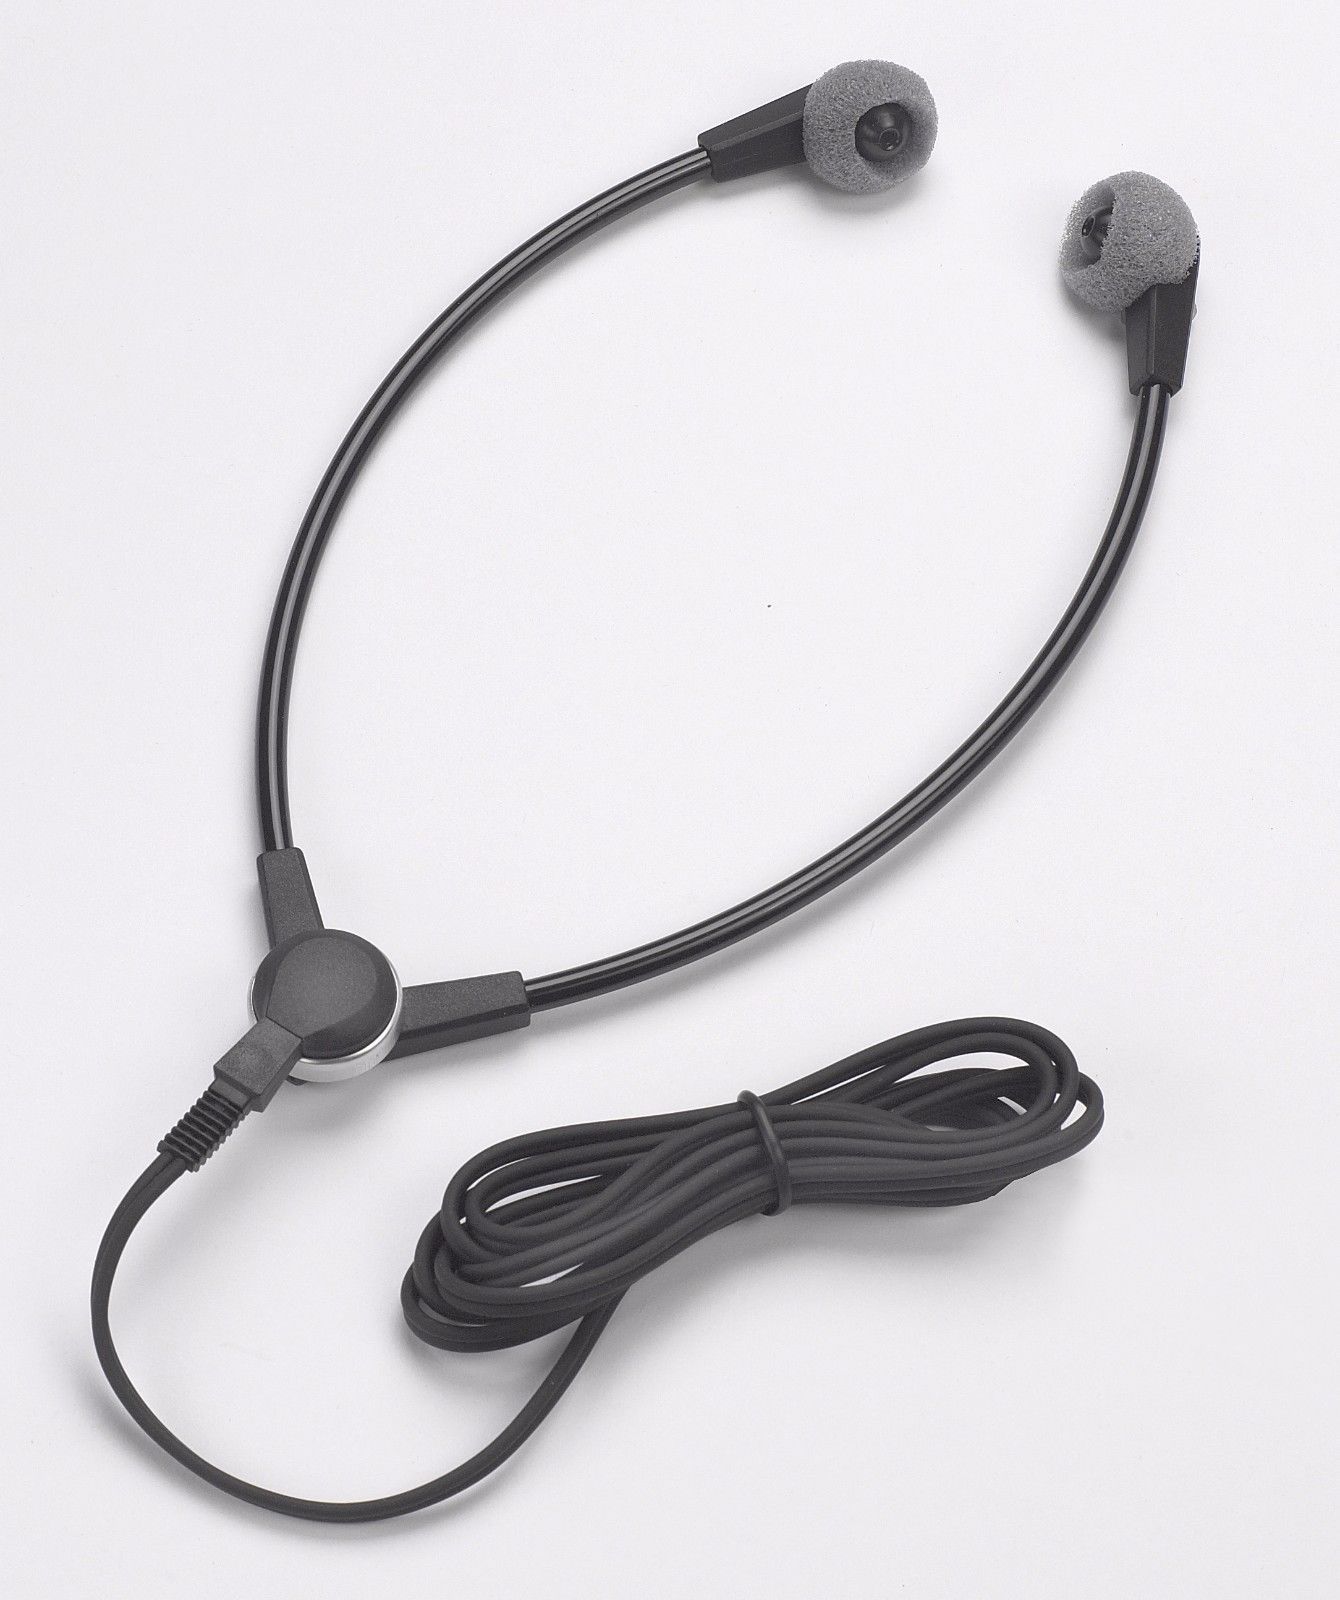 VEC SH55 Wishbone Transcription Headset with 3.5mm 1/8" connector mono headset - $18.95